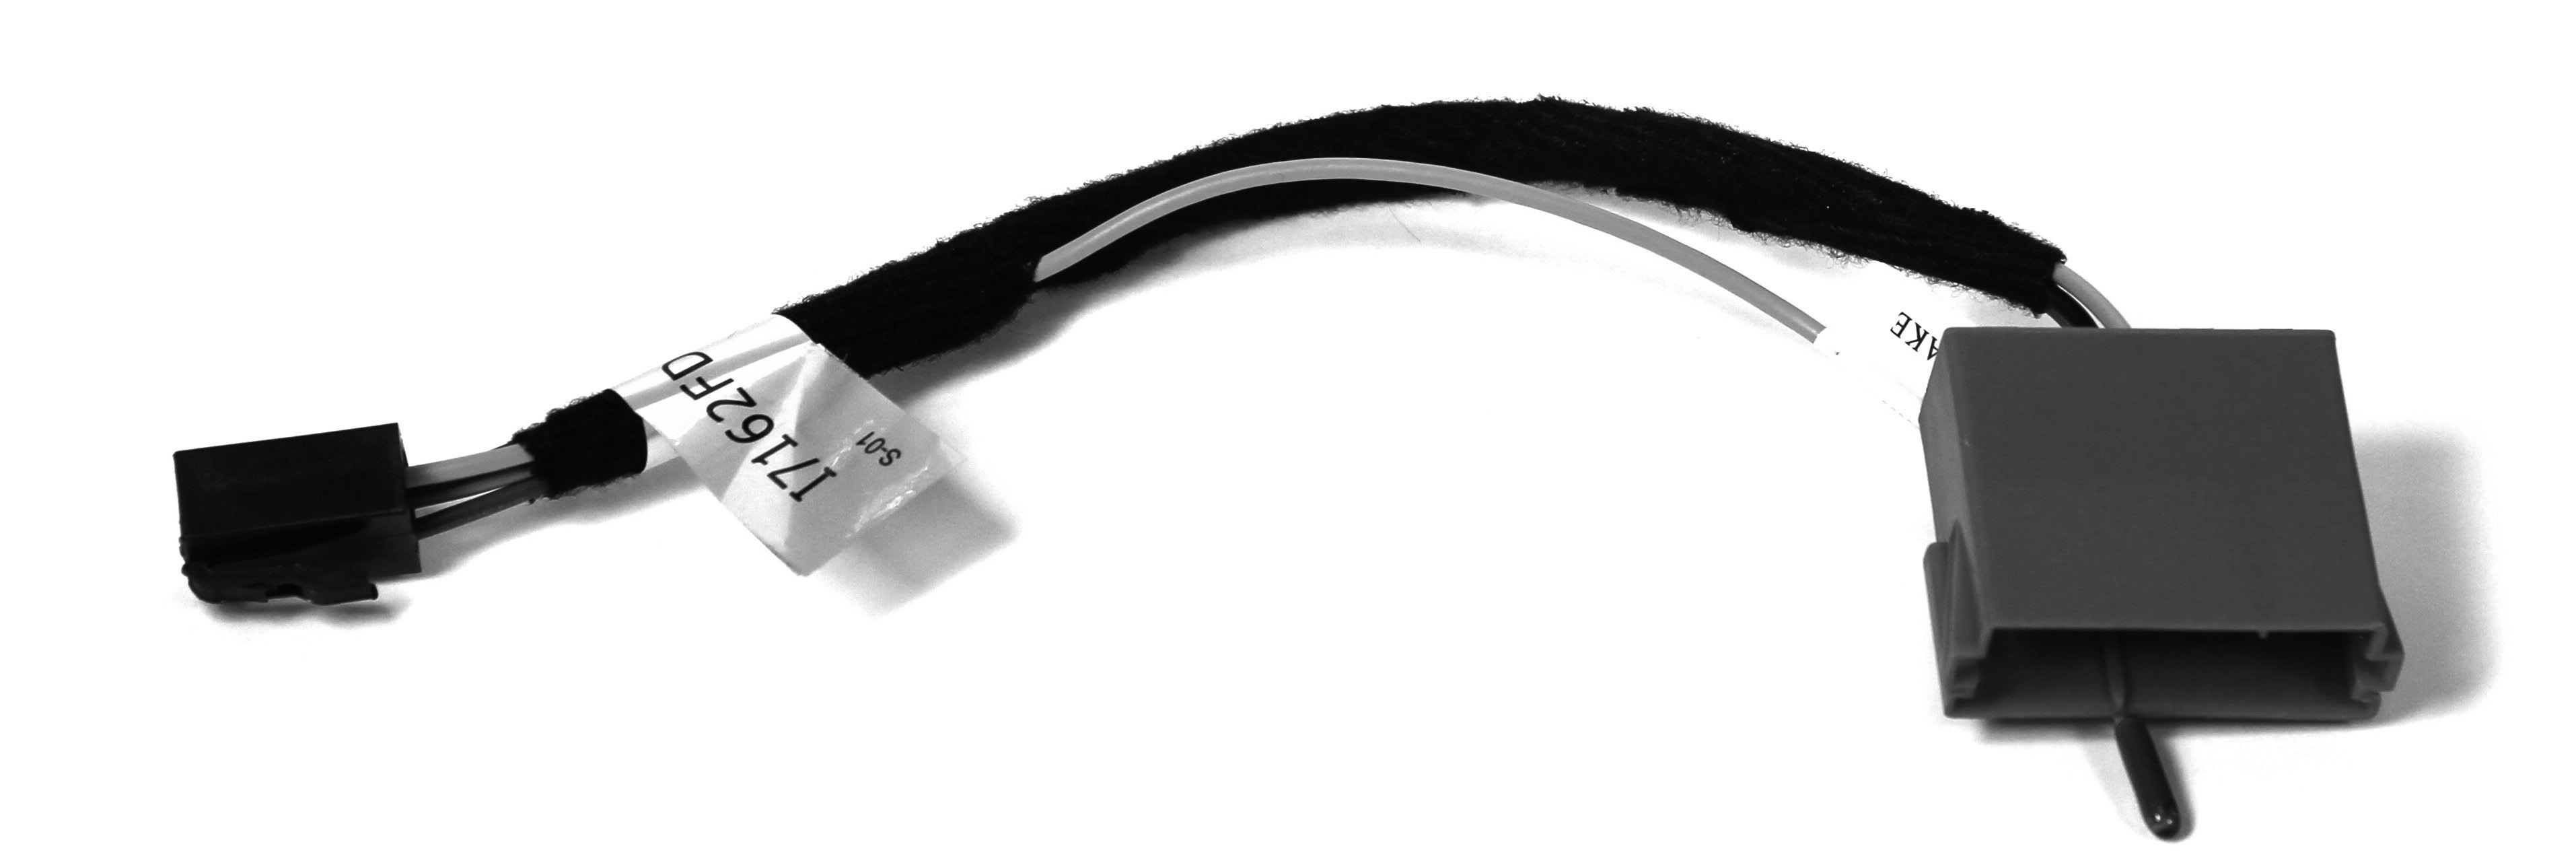 USB Kabelsatz mit 2 Anschlüssen D0 3